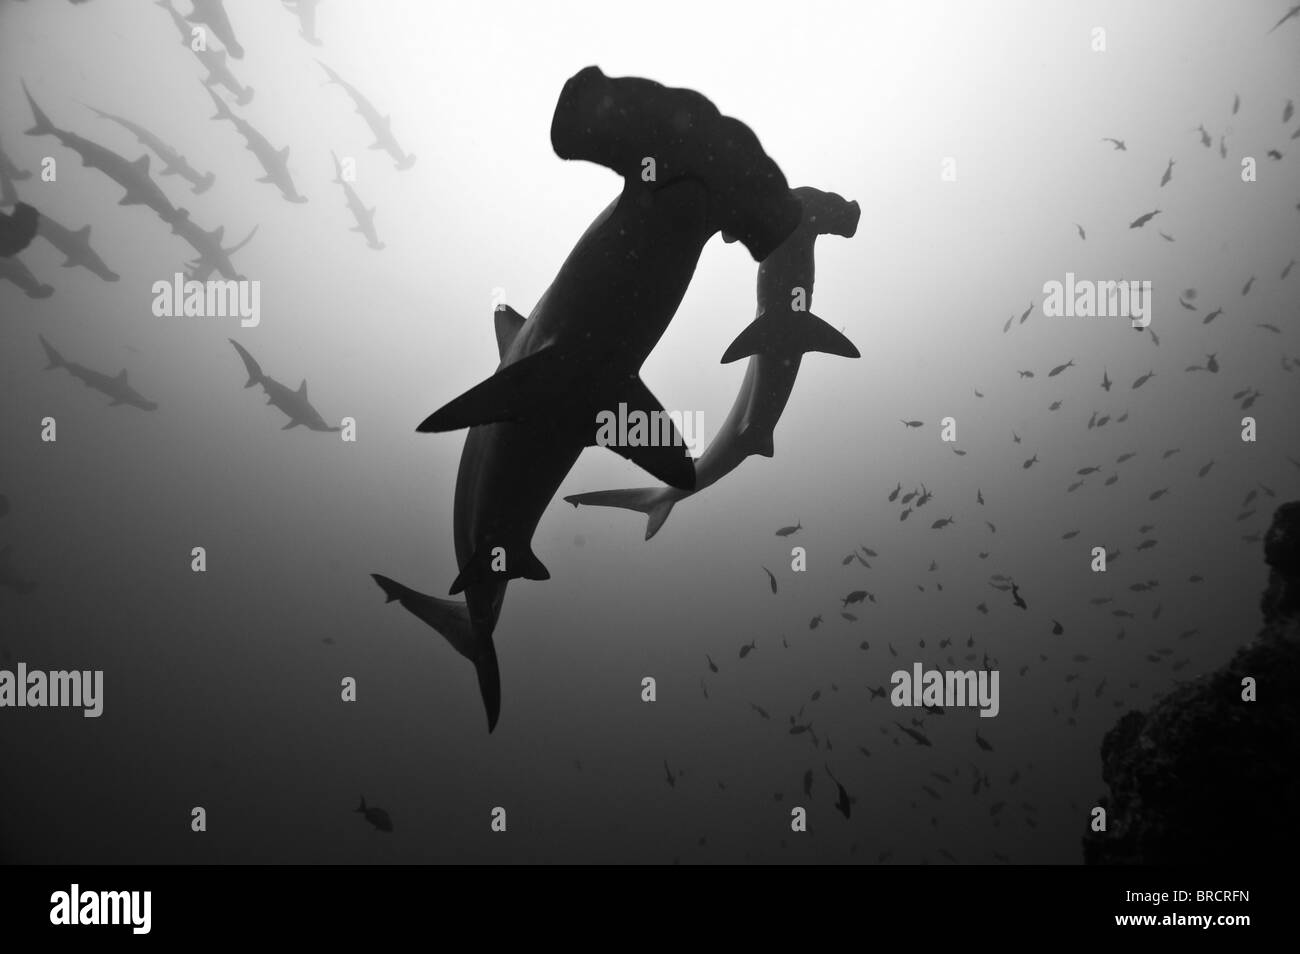 scalloped hammerhead sharks, Sphyrna lewini, Cocos Island, Costa Rica, East Pacific Ocean Stock Photo